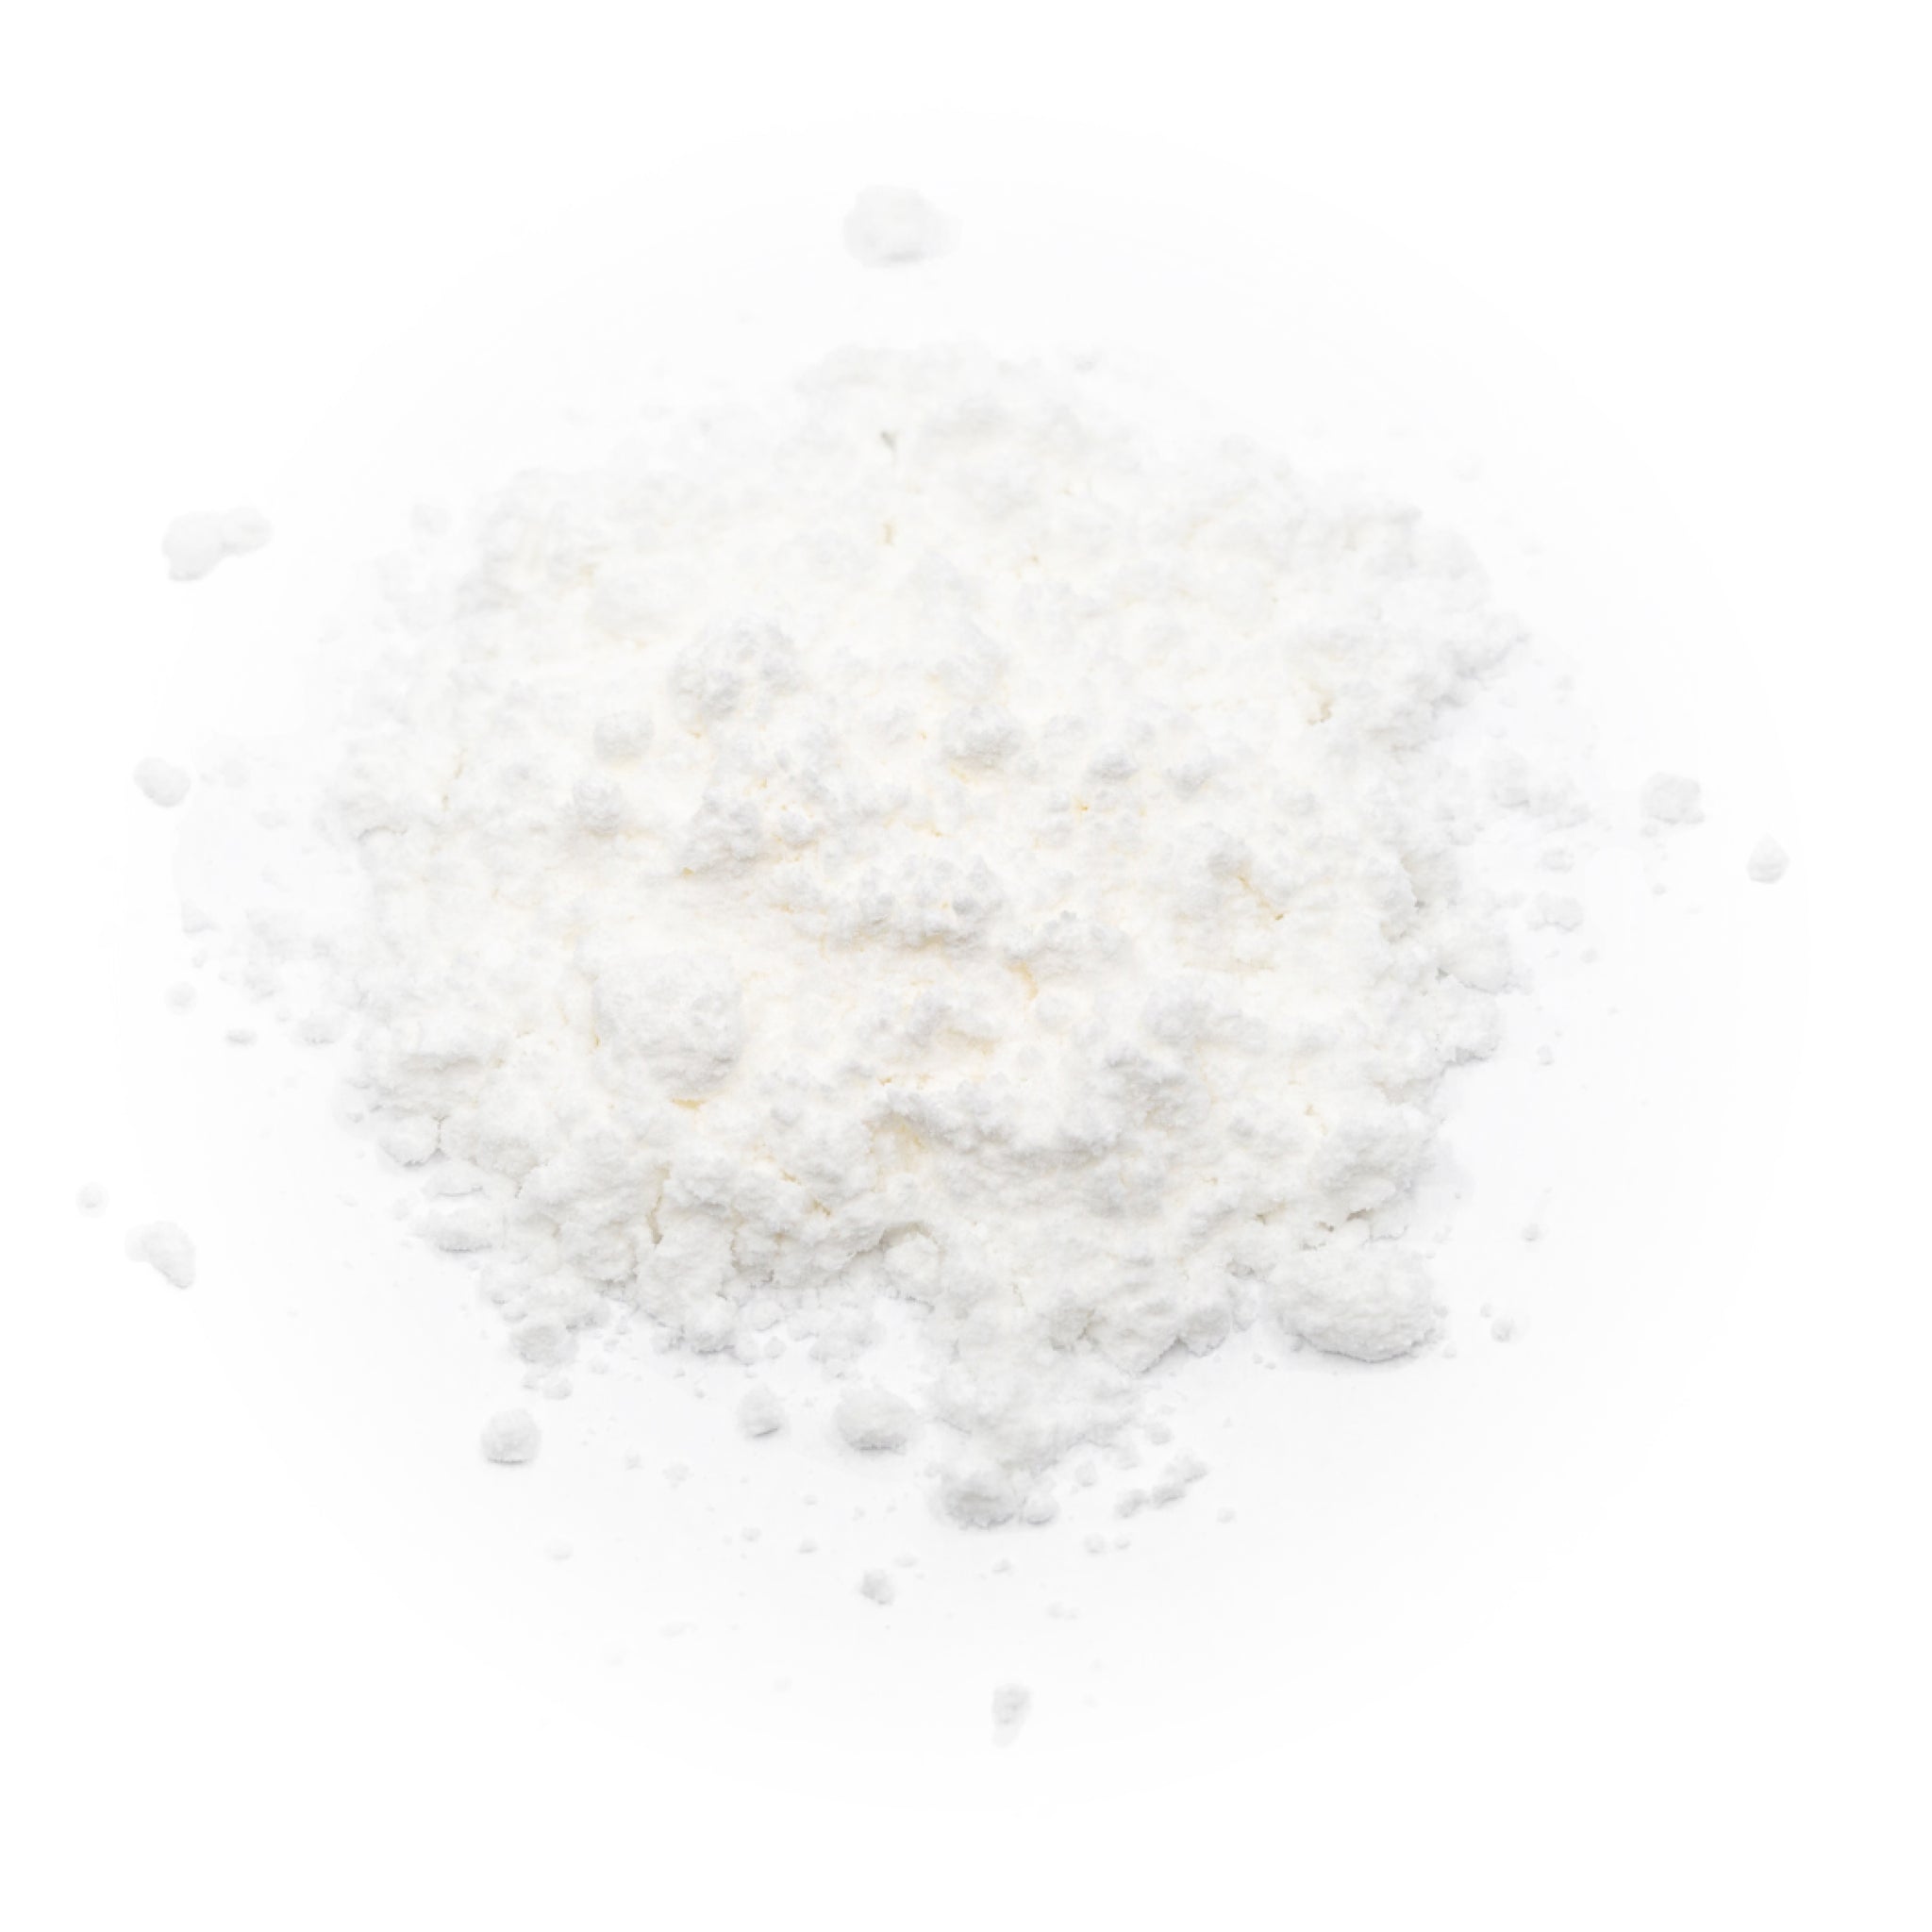 Pile of white powder